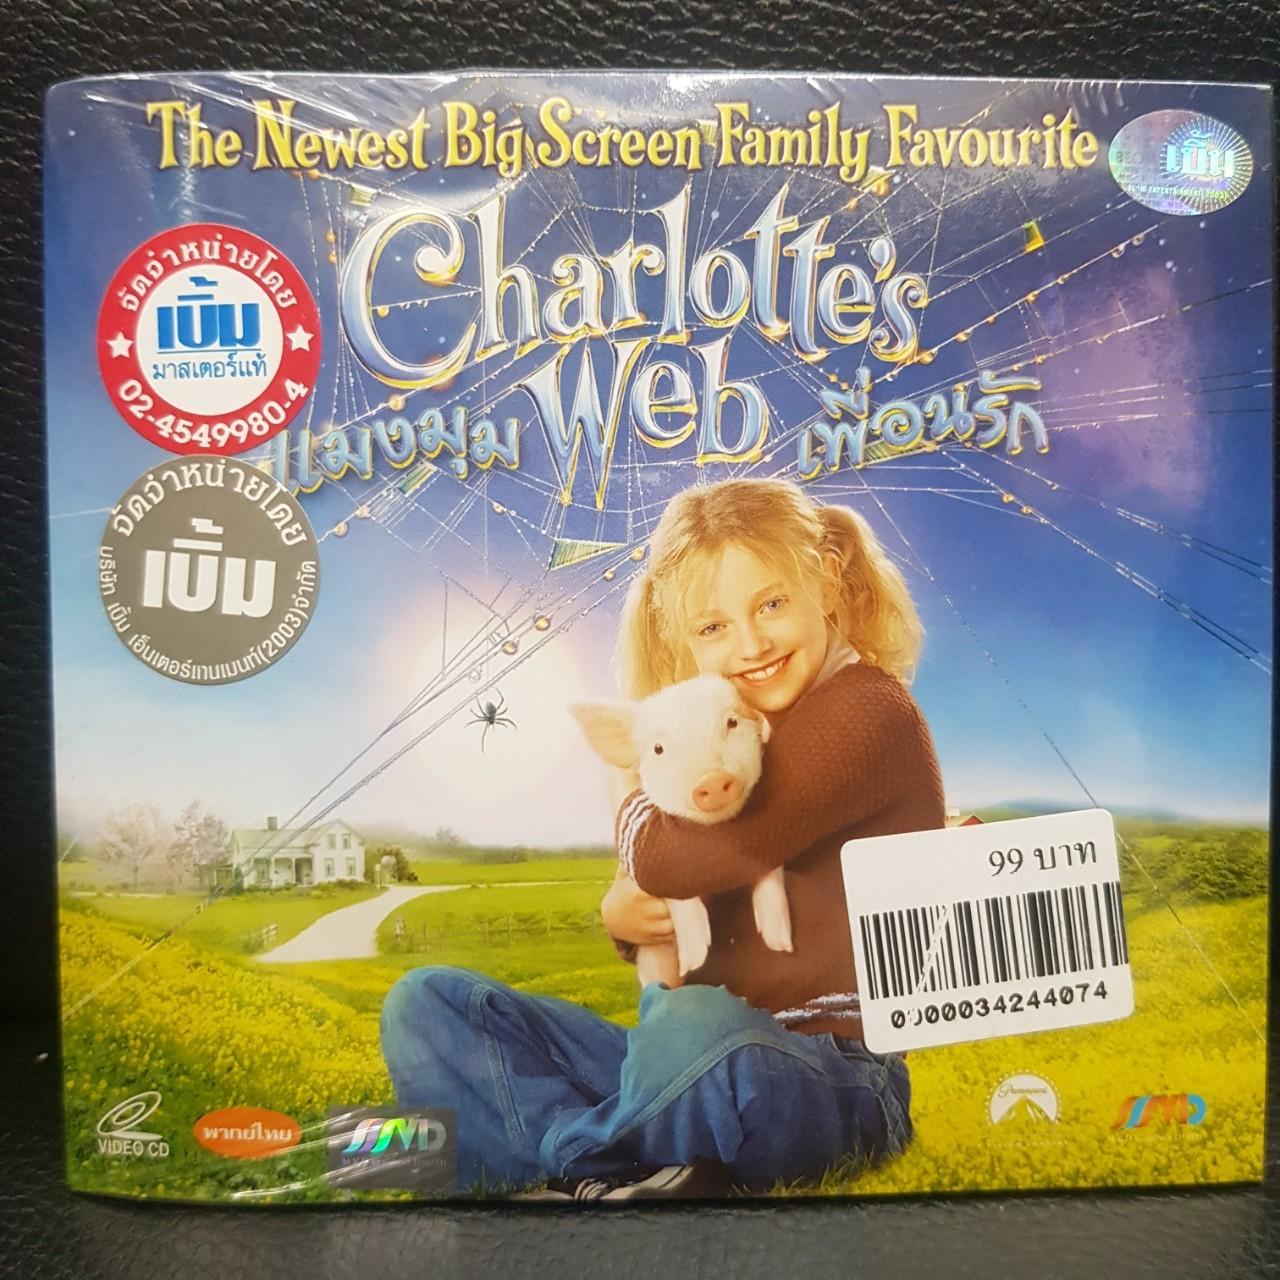 VCDหนัง แมงมุม เพื่อนรัก CHARLOTTE'S WEB ฉบับ พากย์ไทย (MVDVCD99-แมงมุมเพื่อนรักCHARLOTTE'SWEB) ดิสนีย์ disney MVD หนัง ภาพยนตร์ ดูหนัง ดีวีโอซีดี วีซีดี VCD มาสเตอร์แท้ STARMART